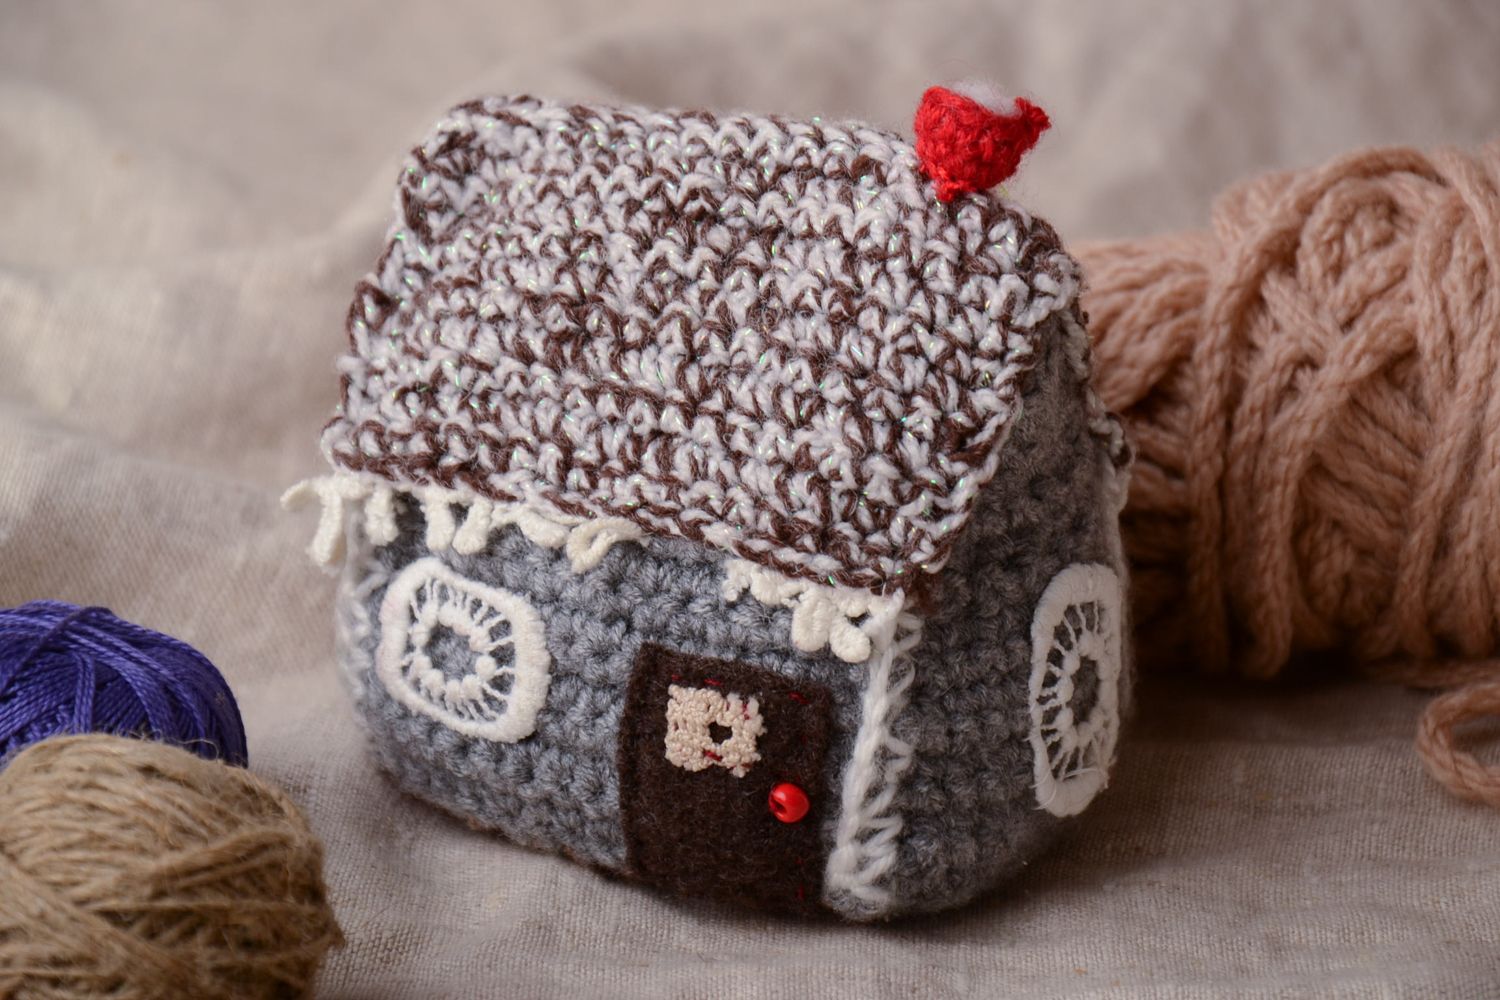 Crochet toy house photo 1